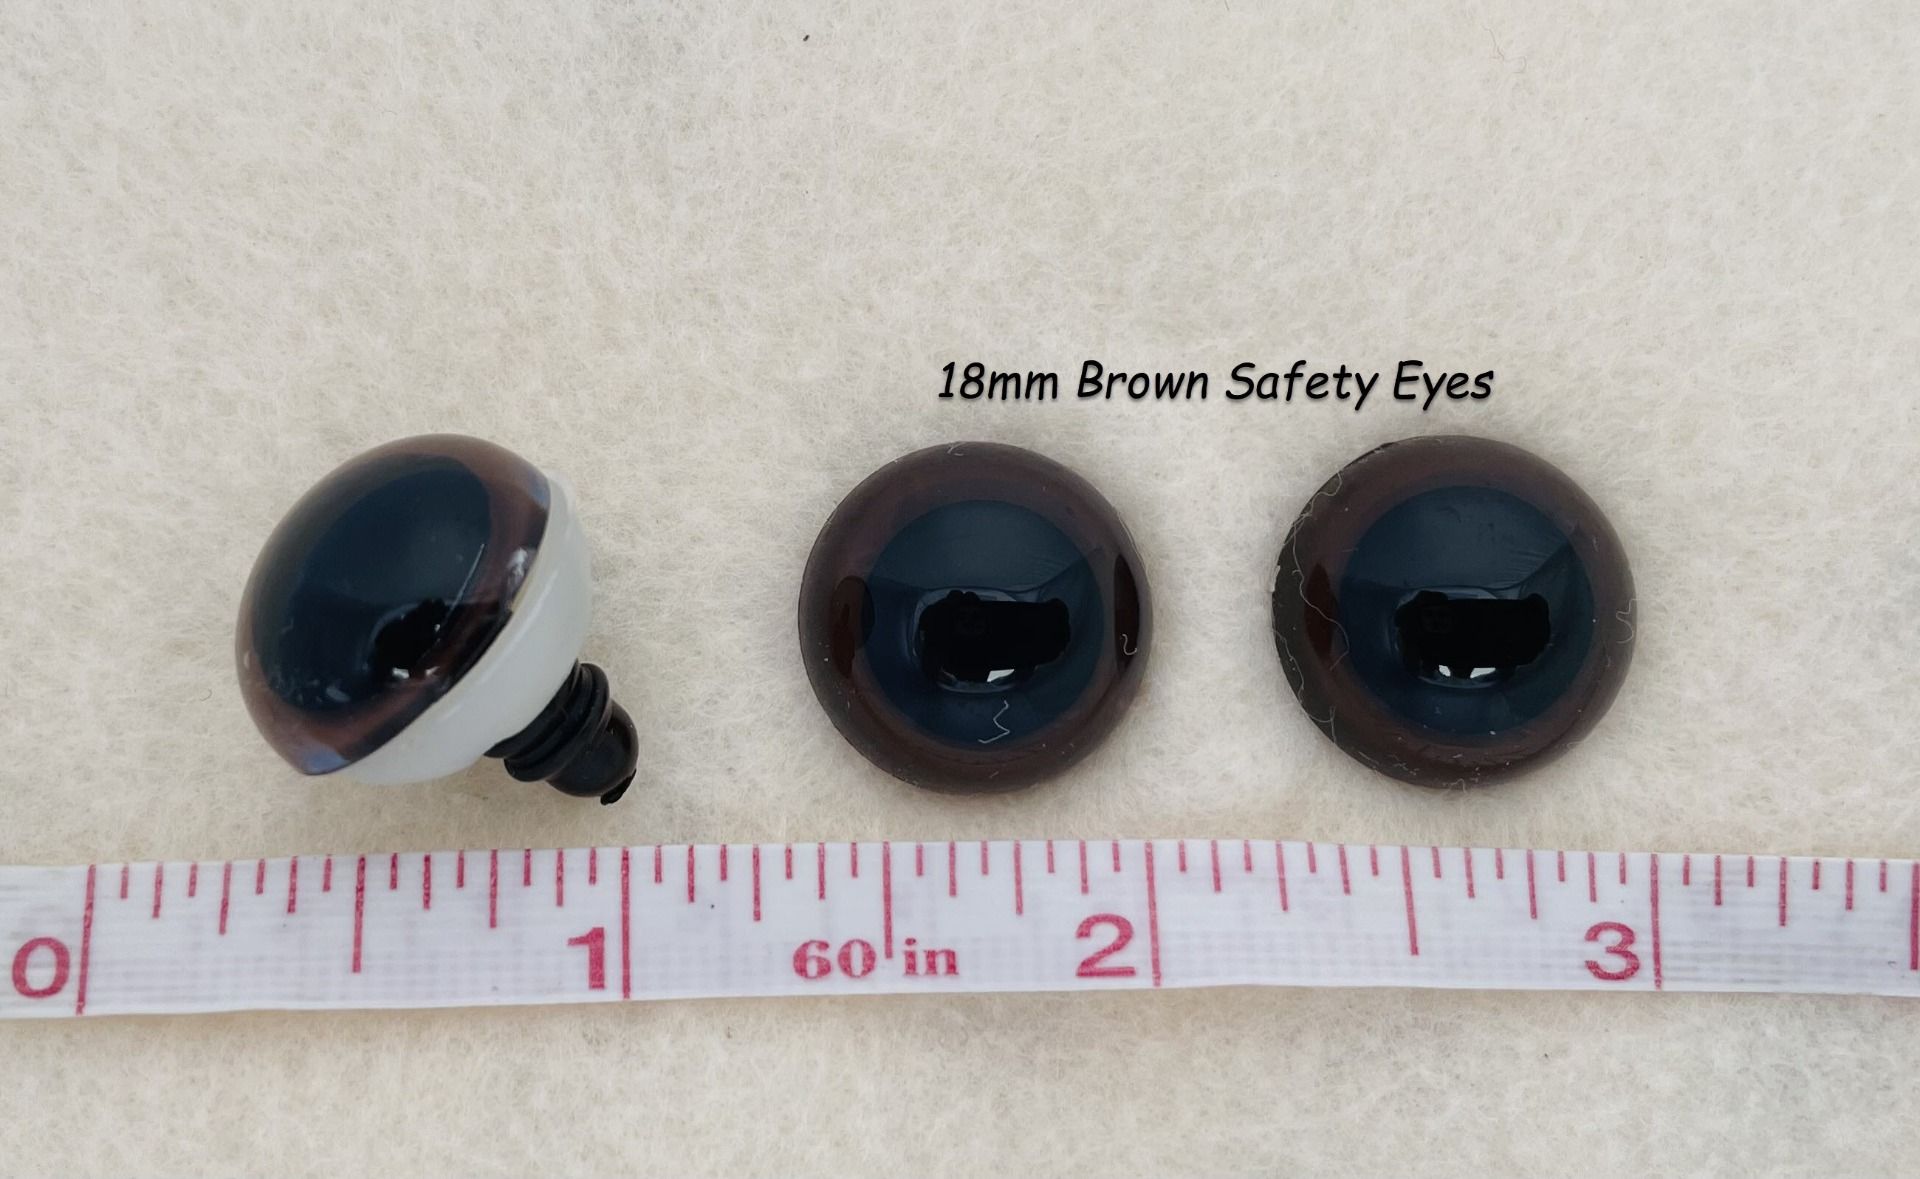 Safety Eyes Brown per pair 